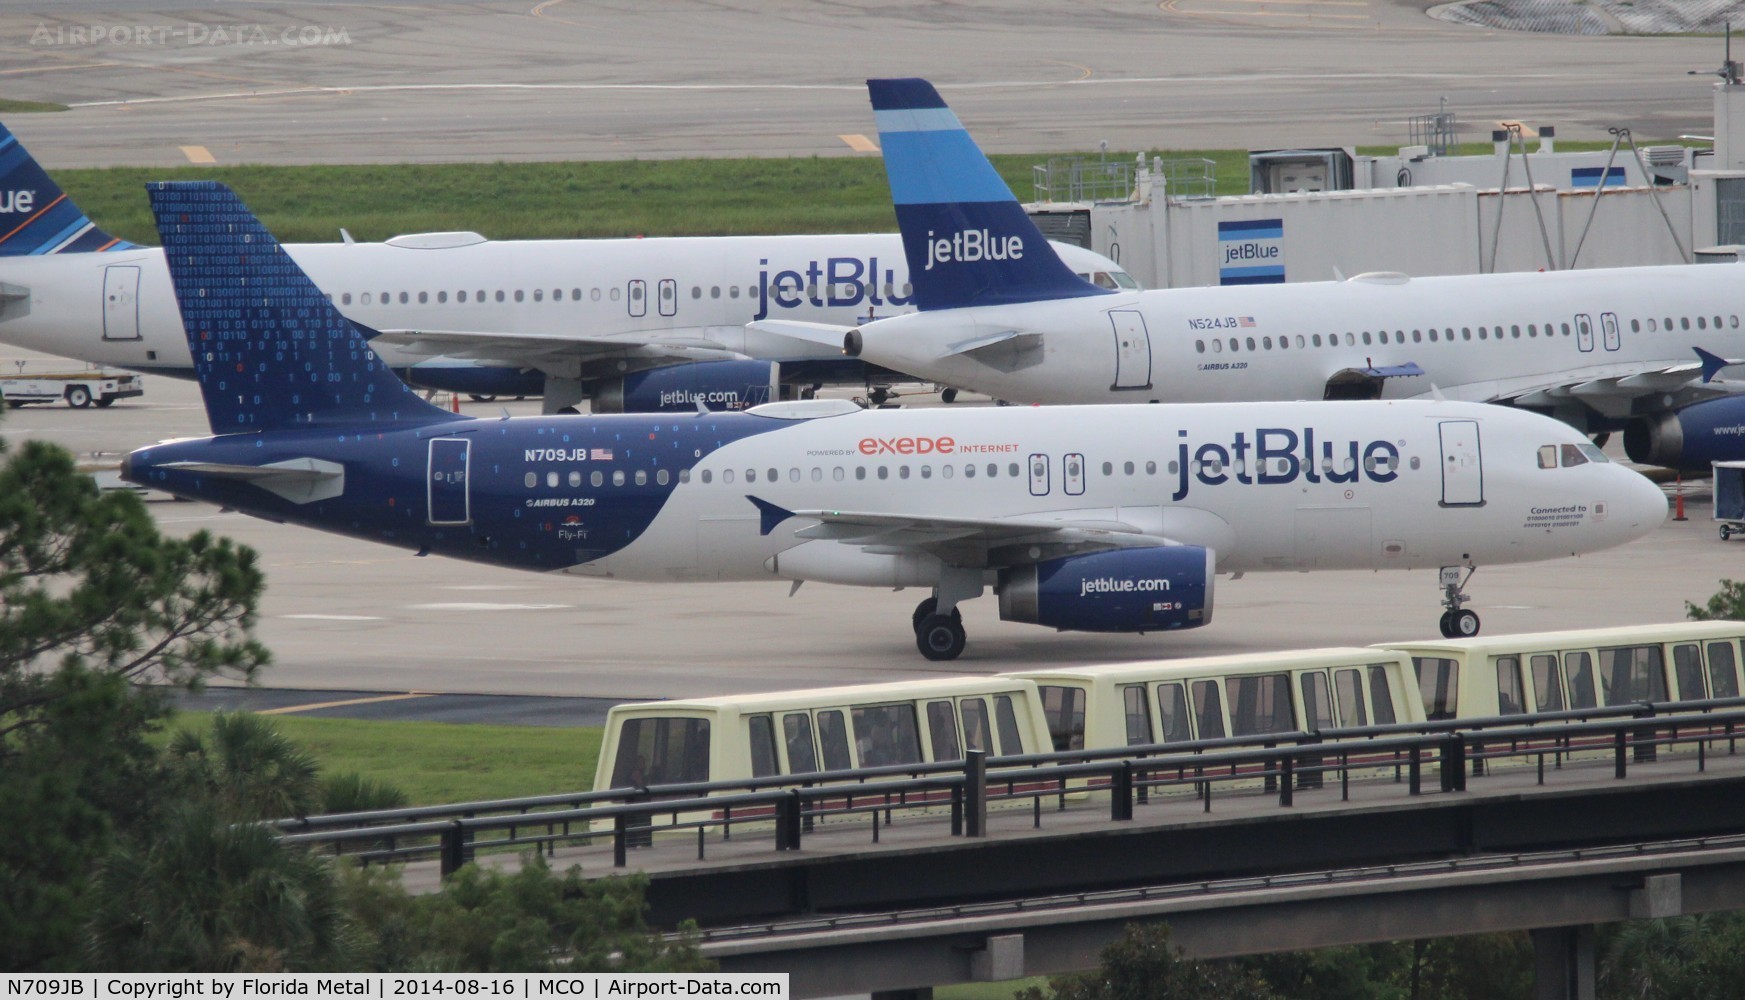 N709JB, 2008 Airbus A320-232 C/N 3488, Jet Blue 01000010 01001100 01010101 01000101 A320